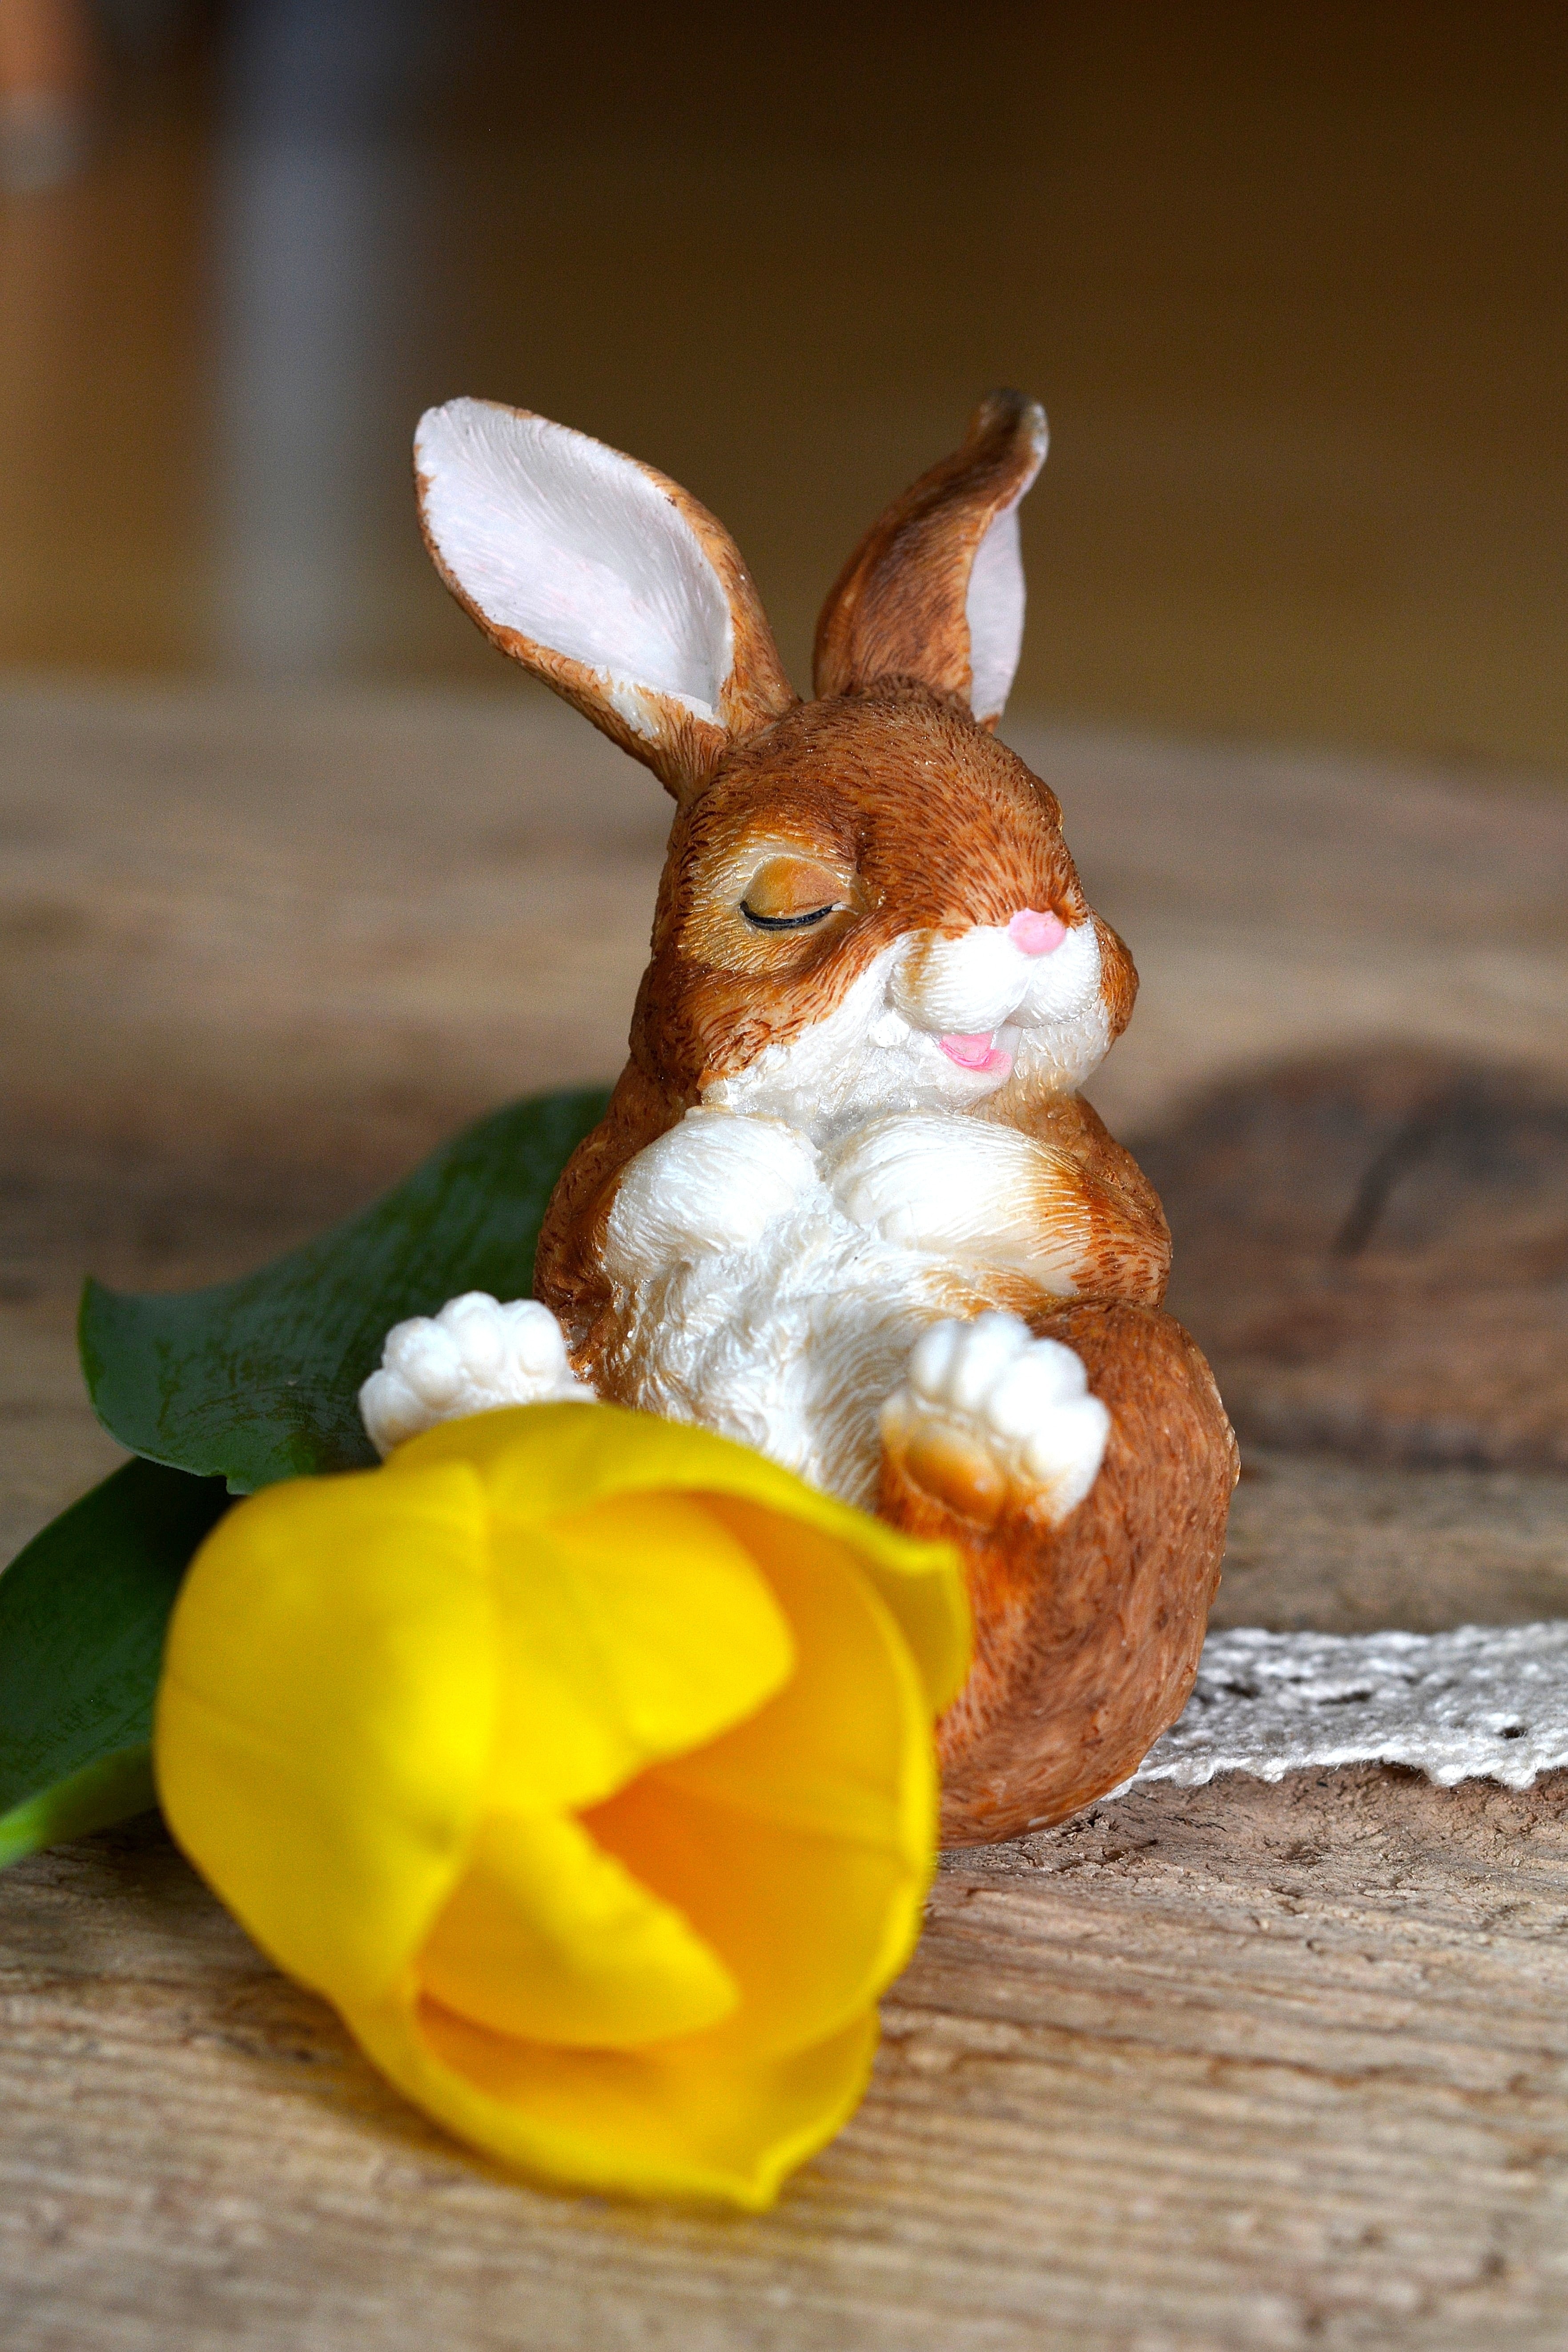 brown and white ceramic rabbit figurine